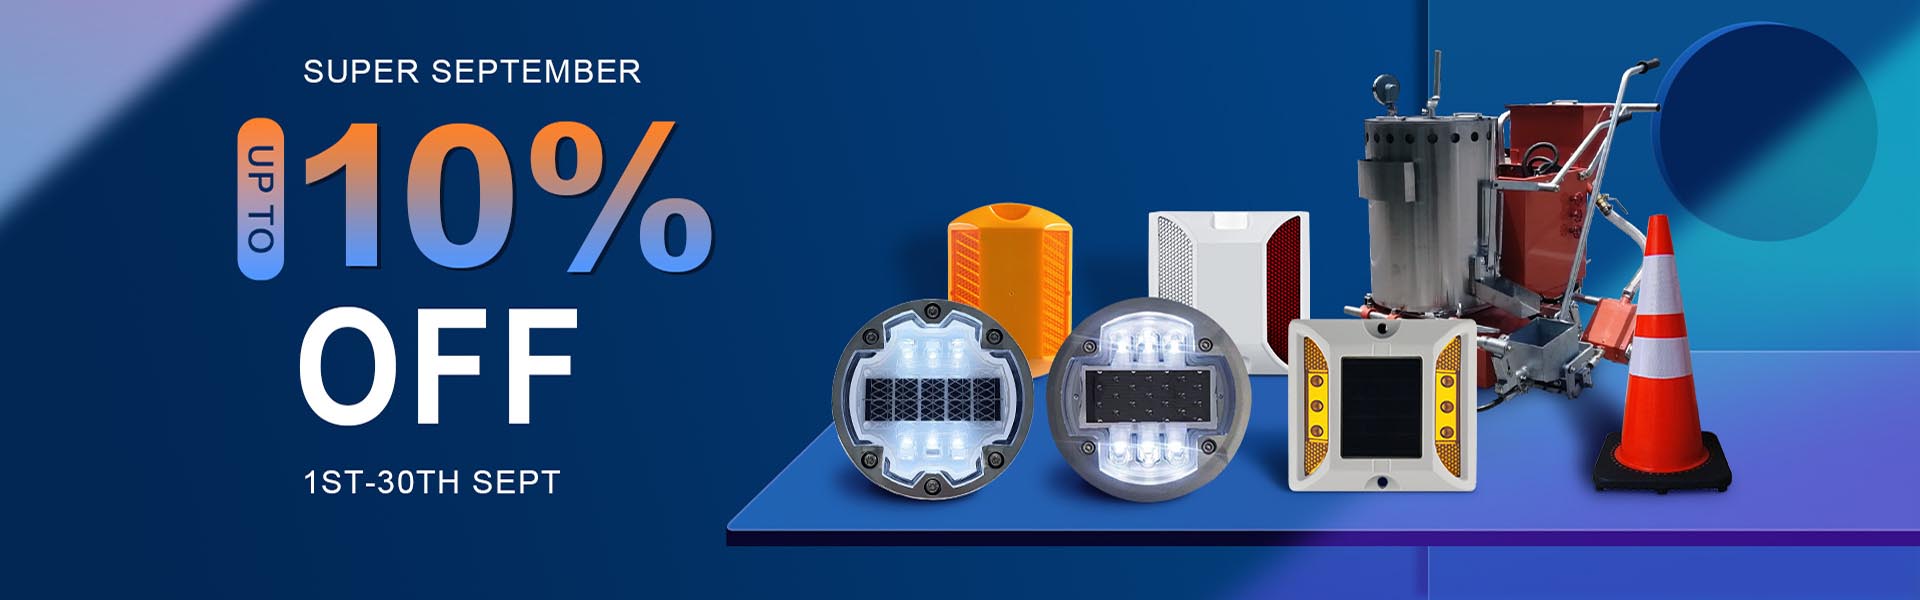 Ruichen solar stud light supplier